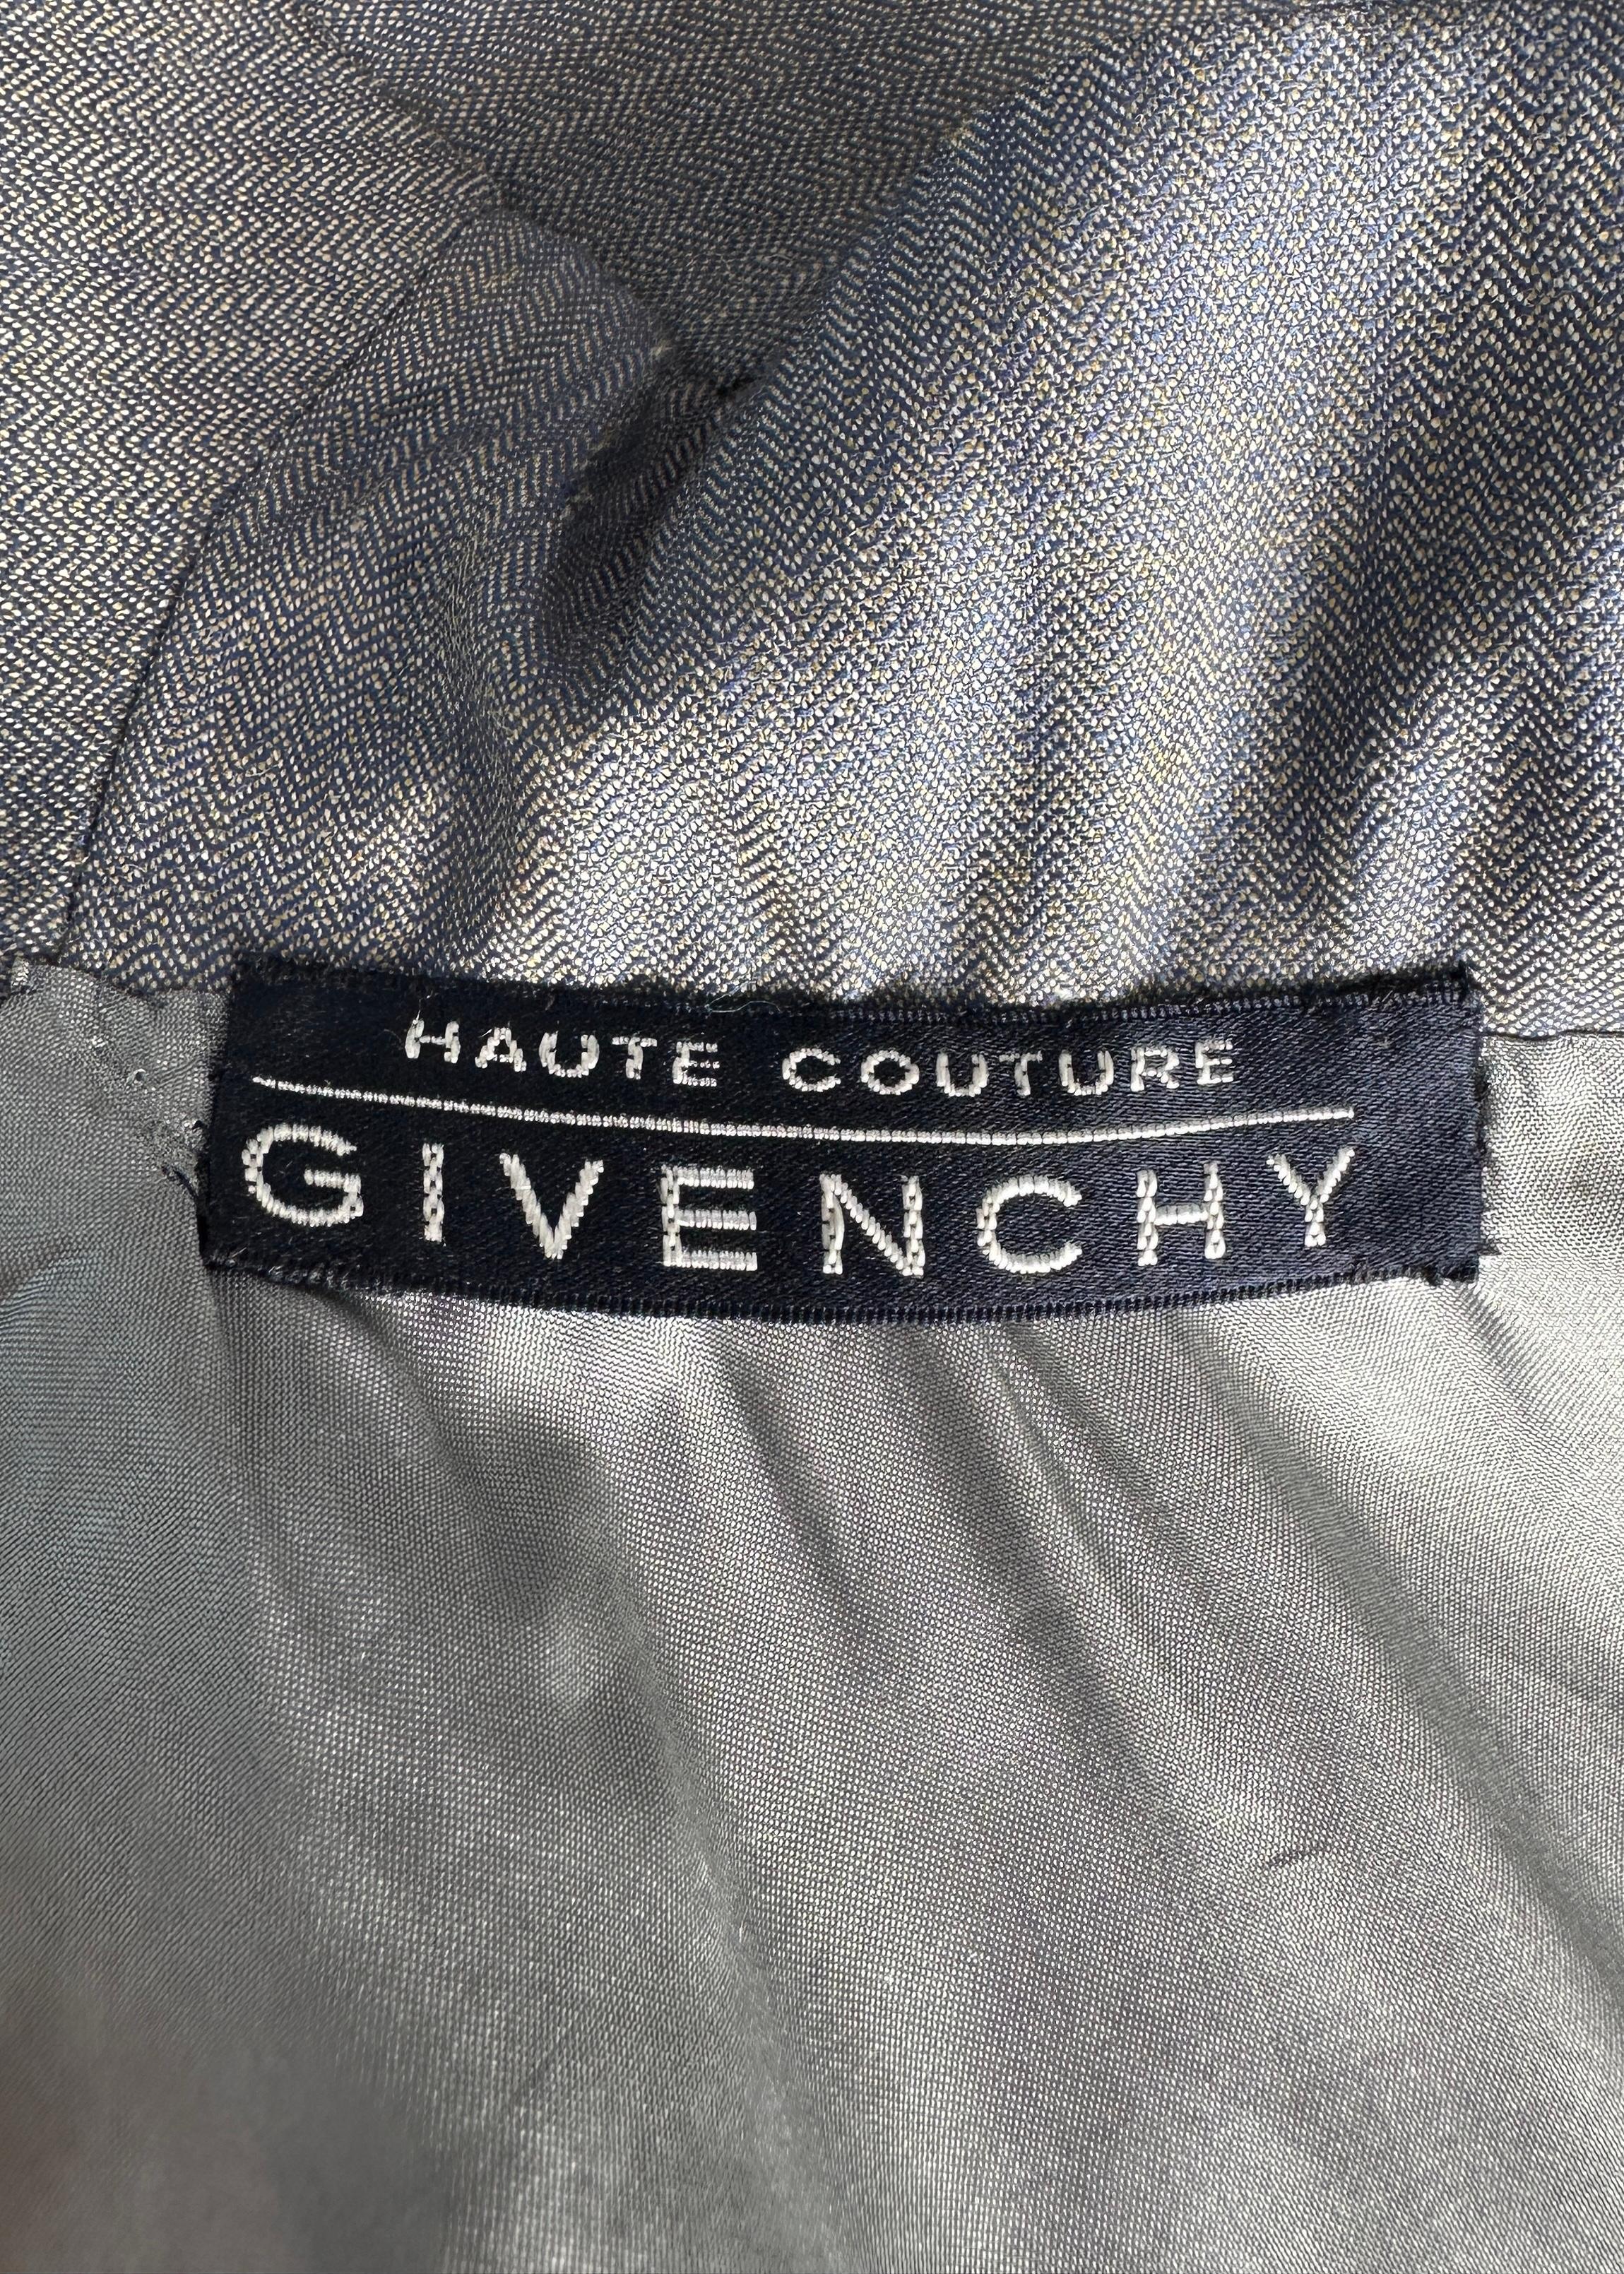 Givenchy Haute Couture par Alexander McQueen printemps 2000 en vente 3